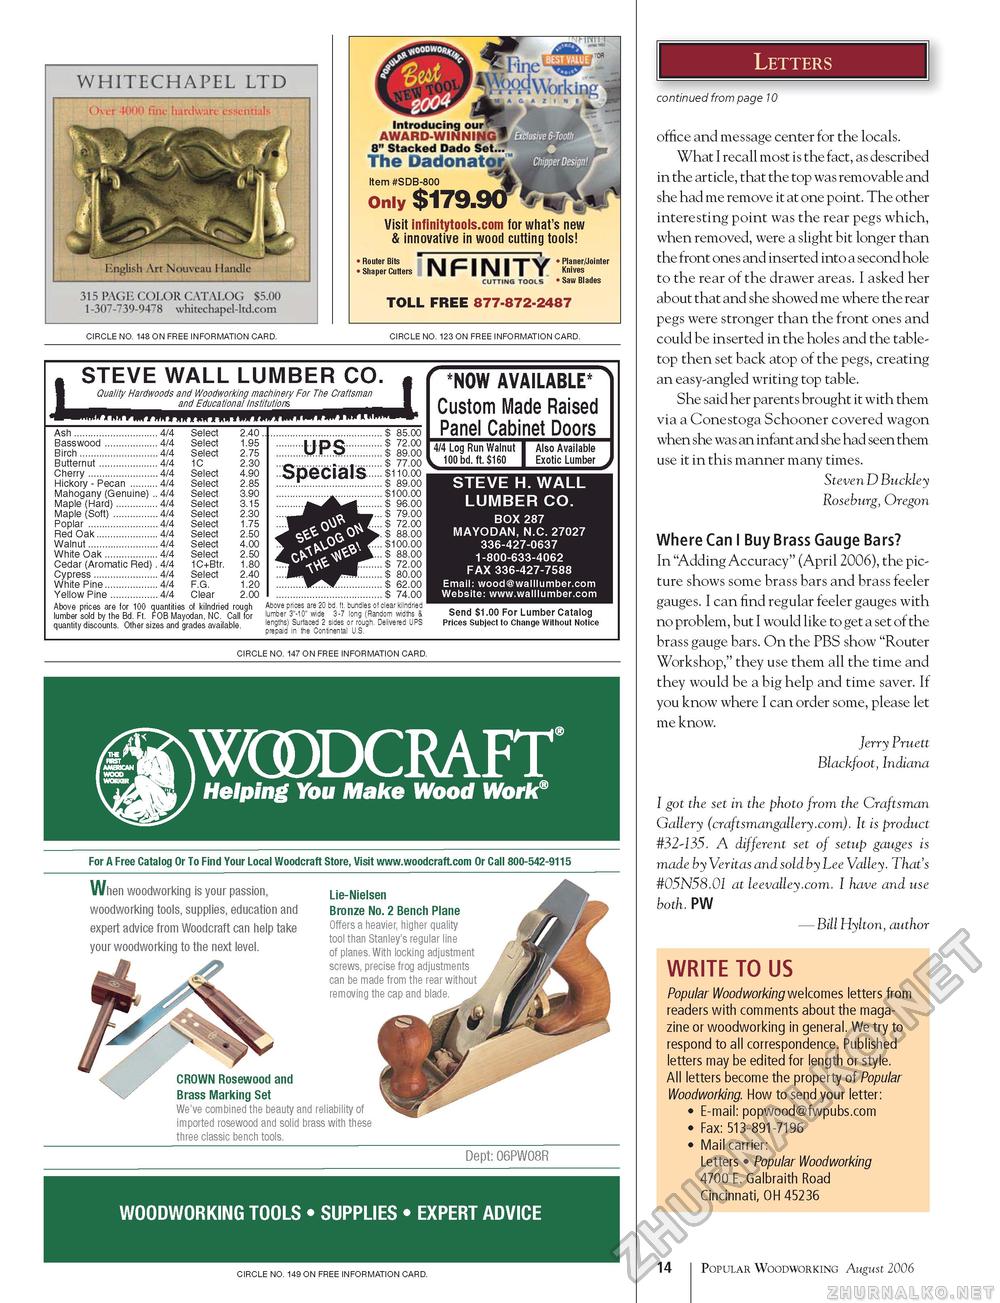 Popular Woodworking 2006-08  156,  16